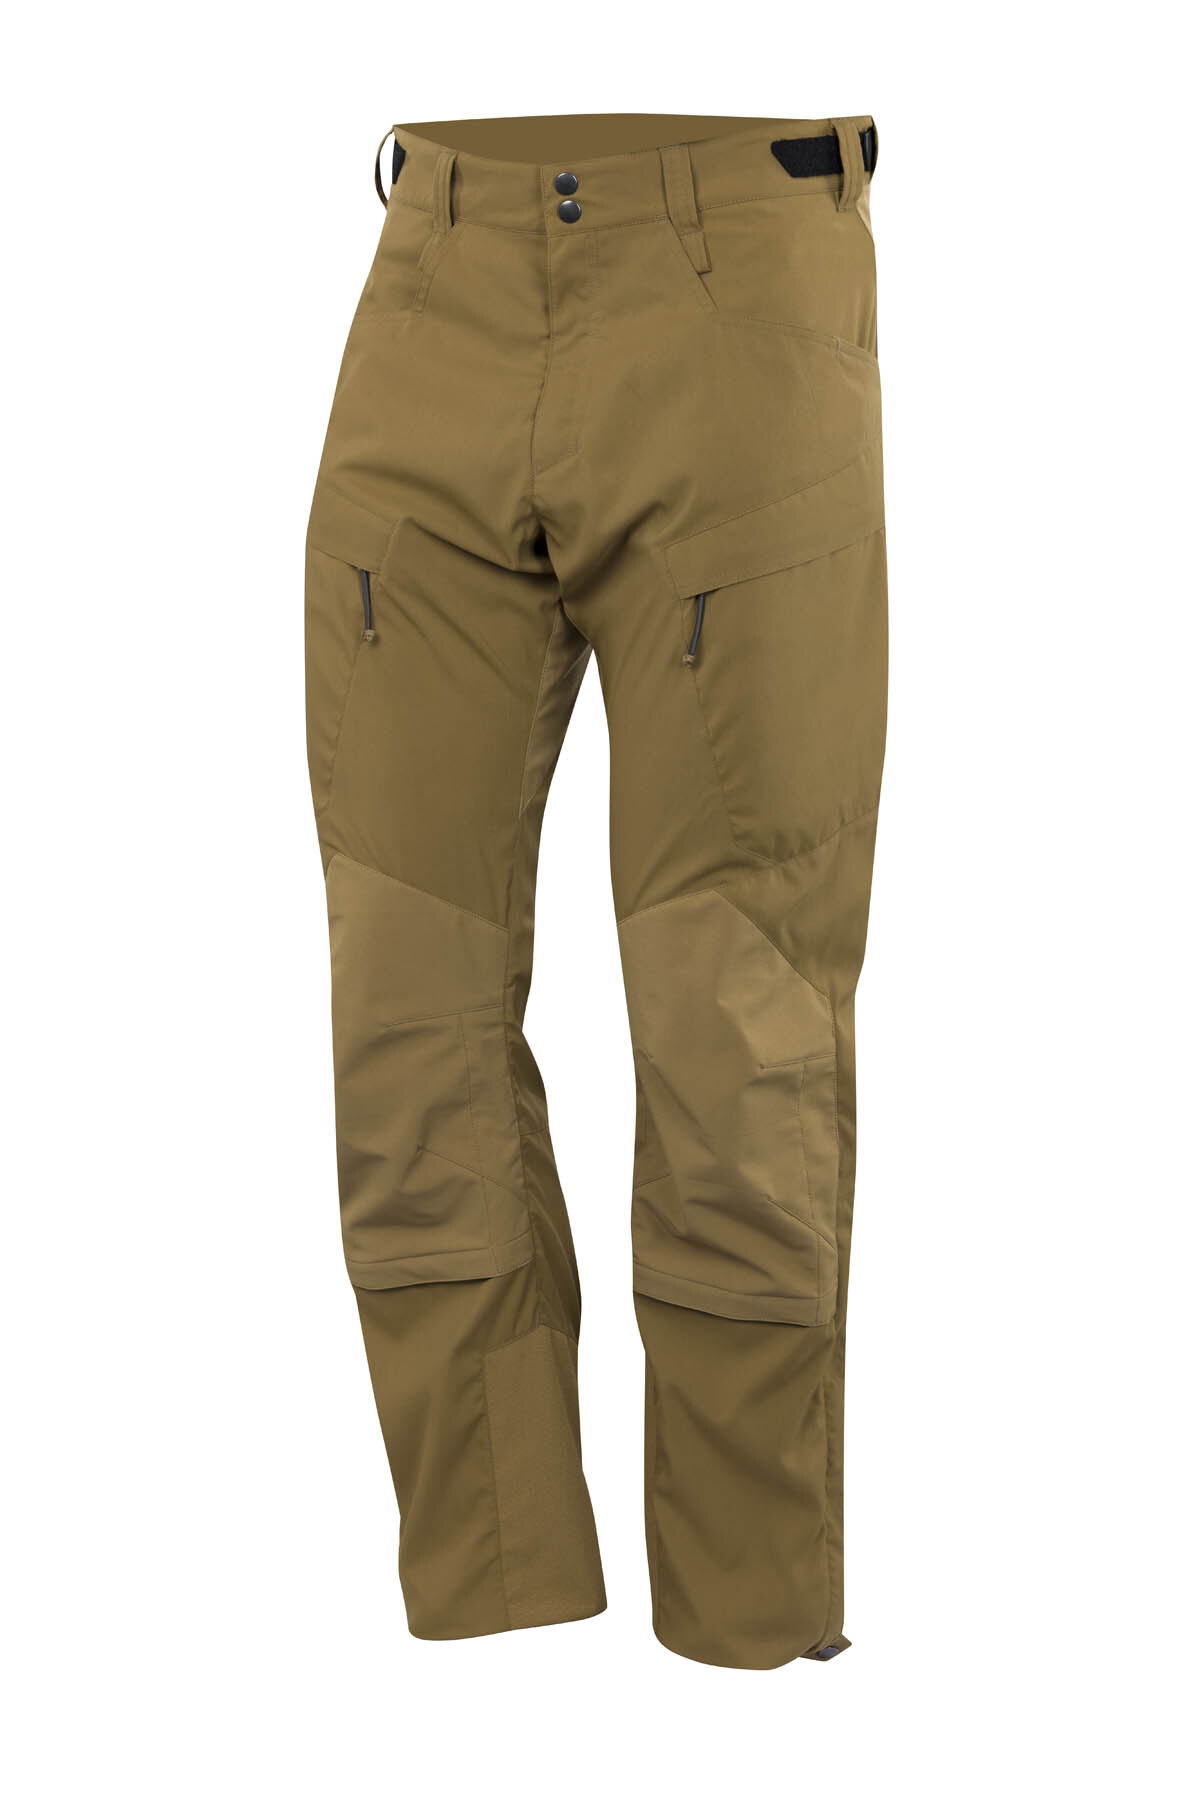 Softshellové kalhoty Operator Tilak Military Gear® – Coyote (Barva: Coyote, Velikost: XL)